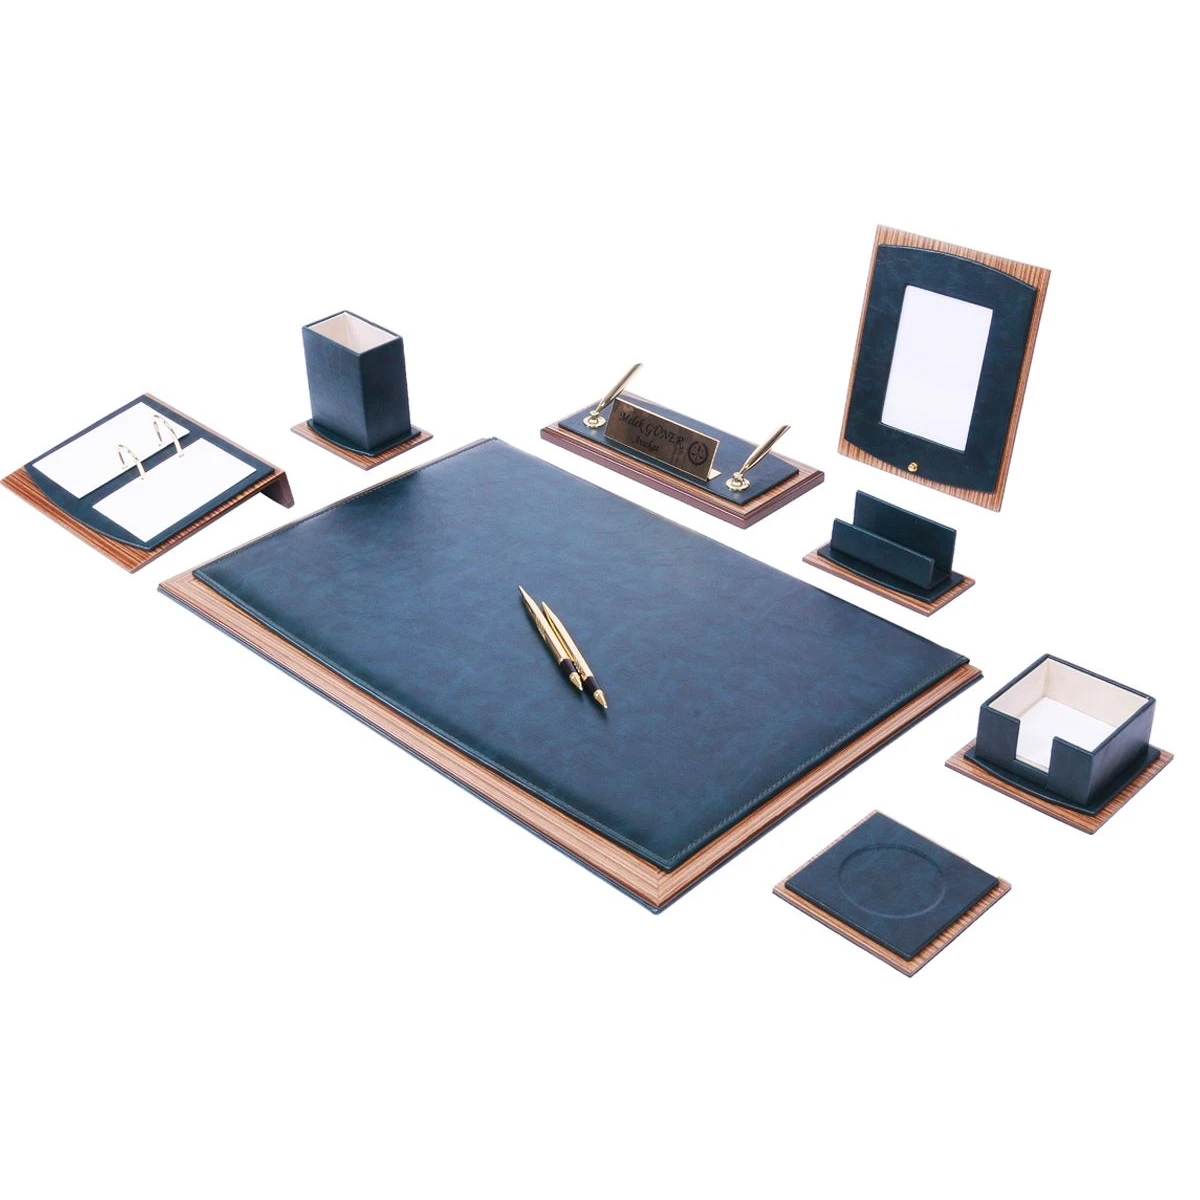 Star Luxury Leather Desk Set 10 Pieces Desk Organizer Set Office Accessories Desk Accessories Office Supplies Office Organizer